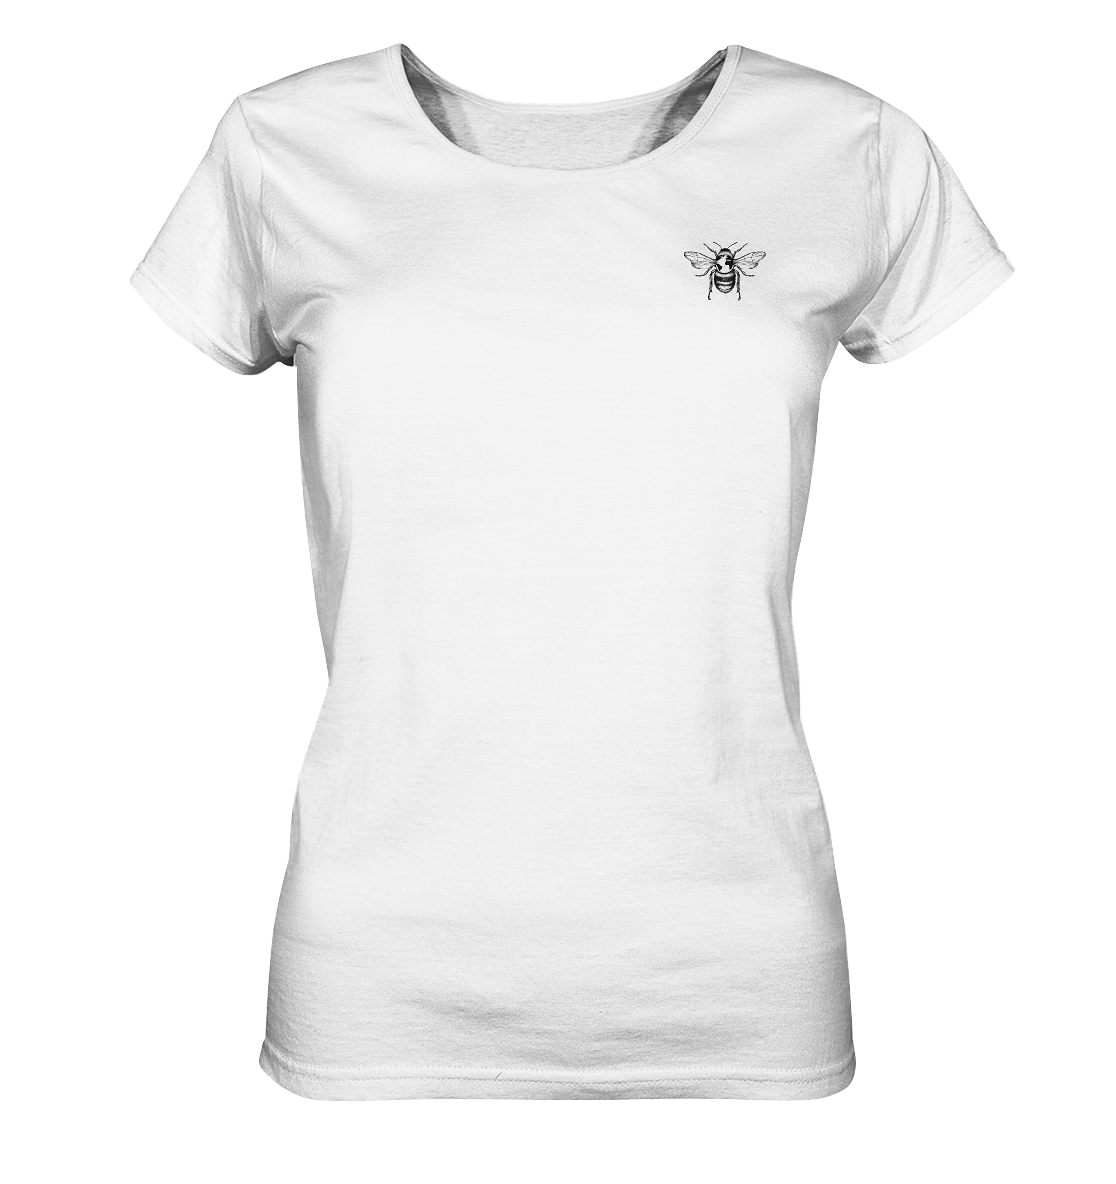 front-ladies-organic-shirt-f8f8f8-1116x.png